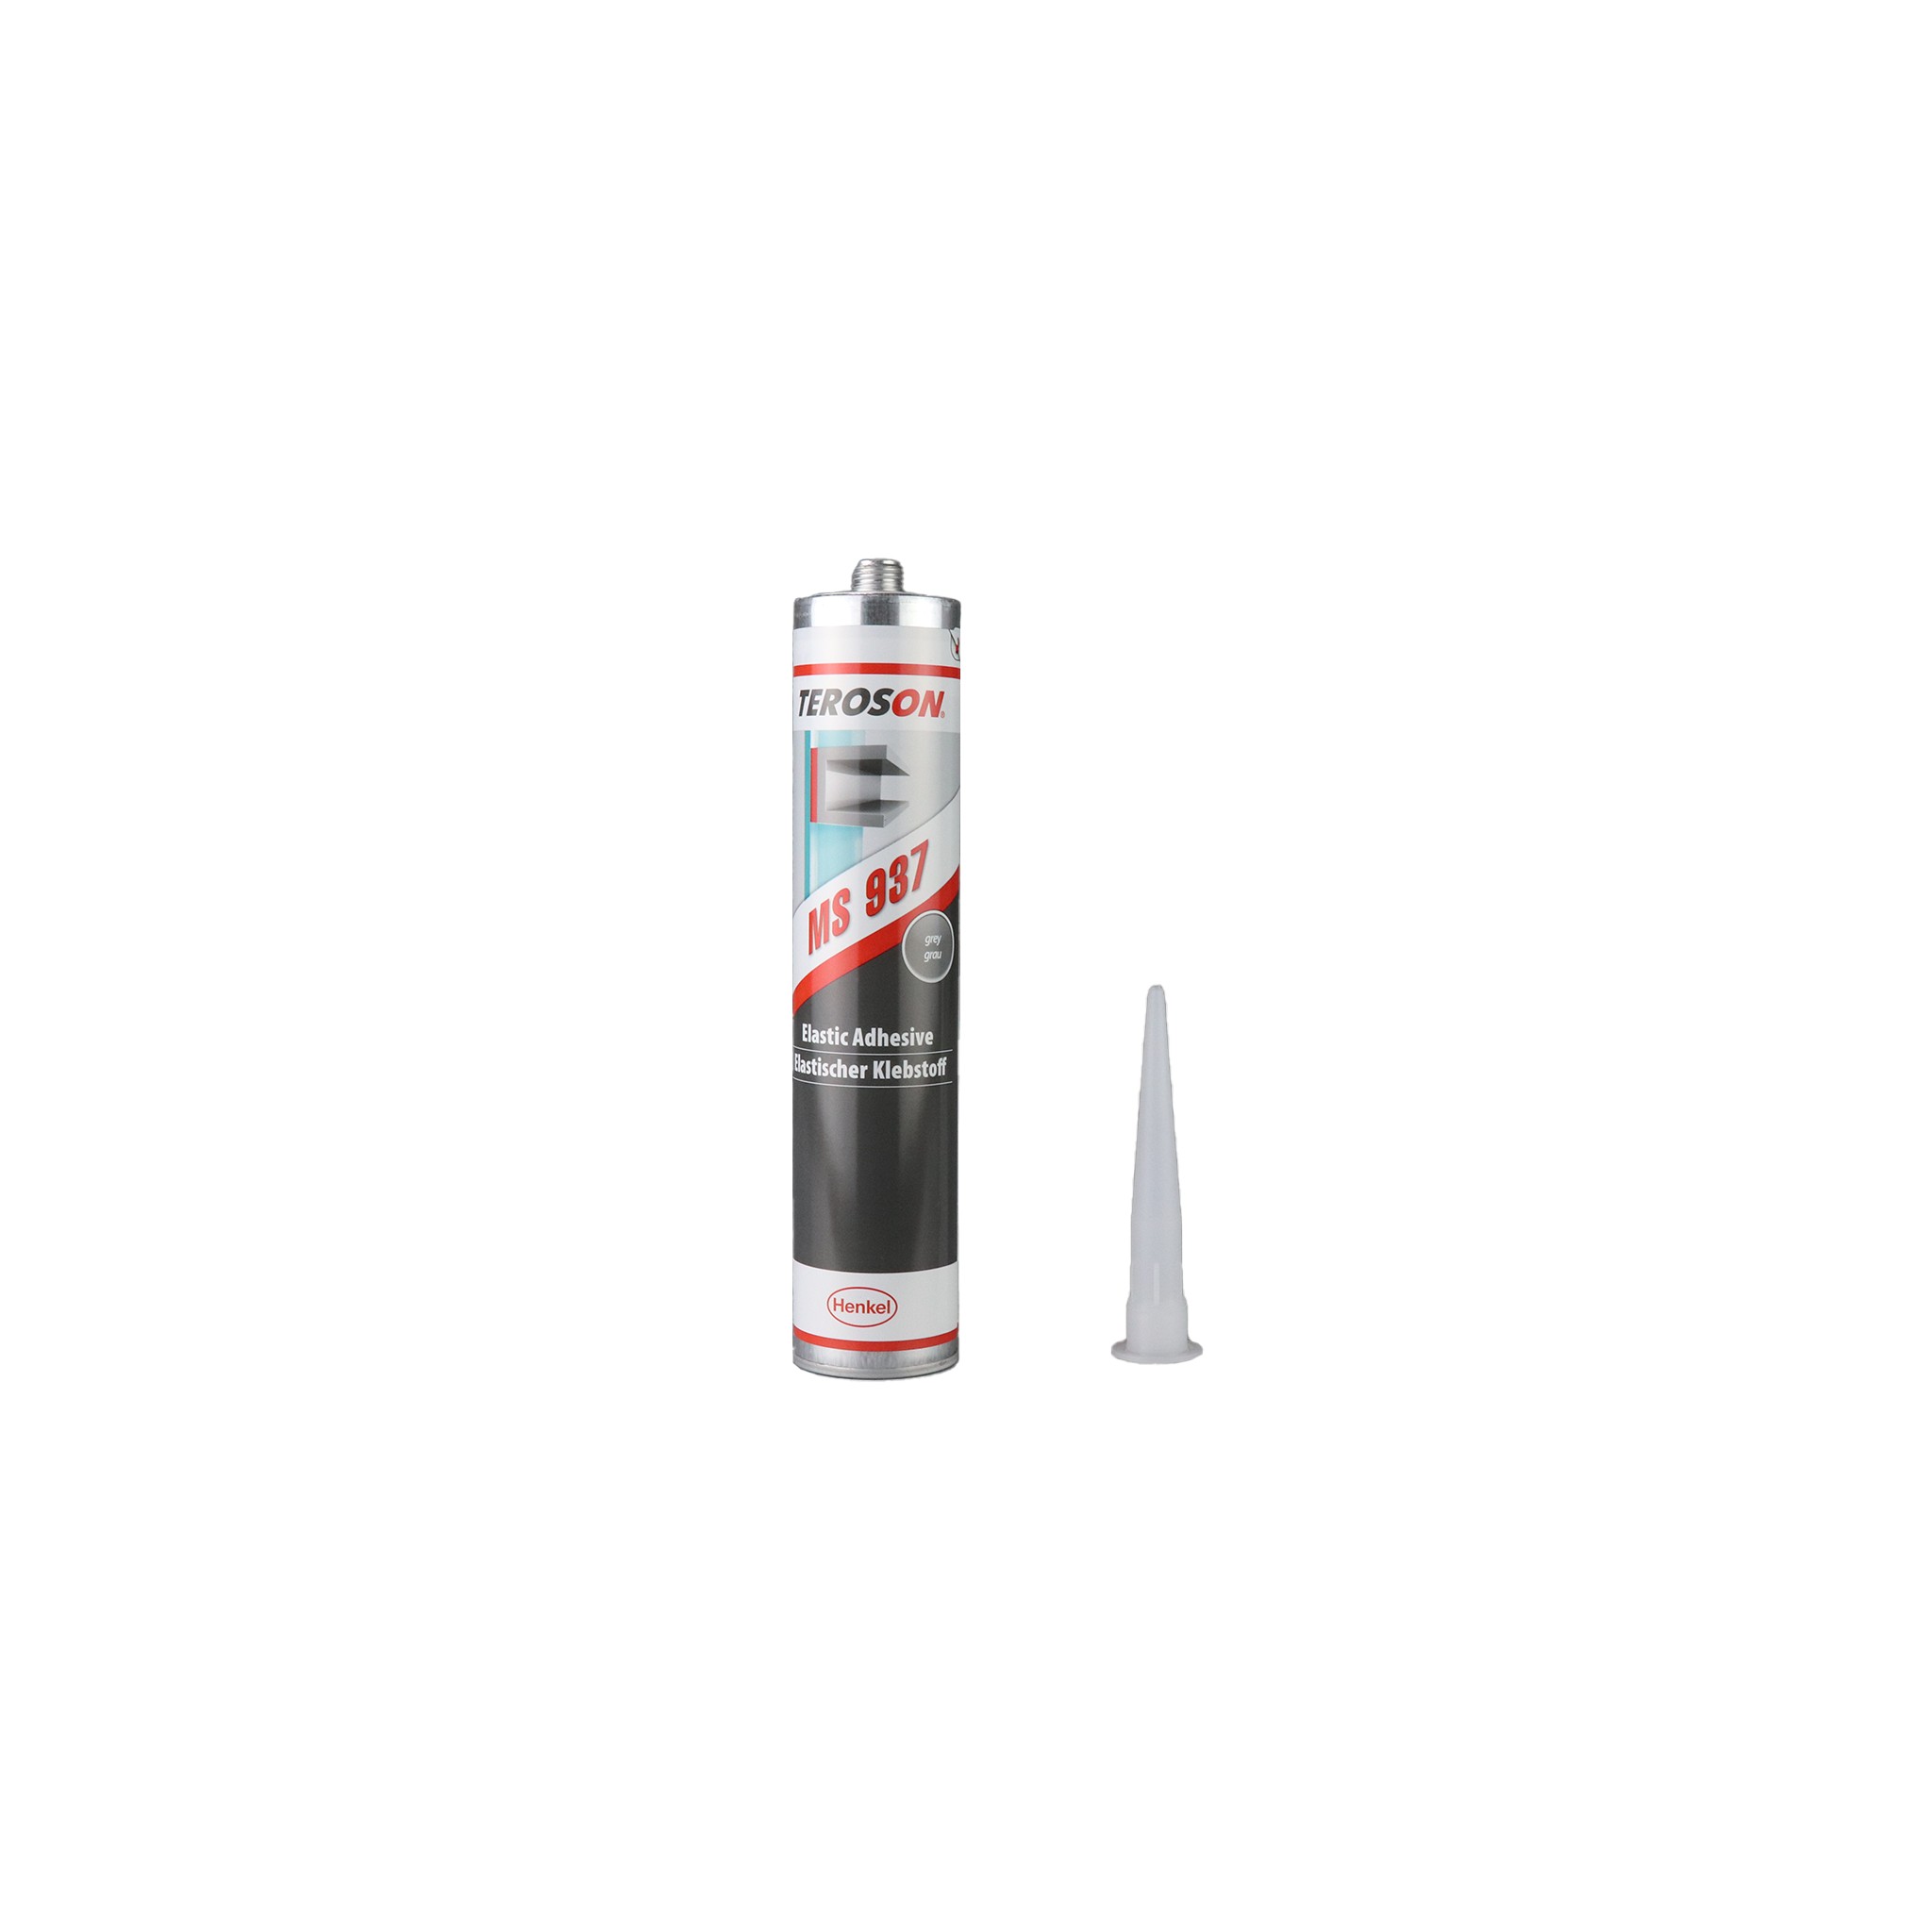 TEROSON SI 9160 - Adhesive/sealant - Henkel Adhesives